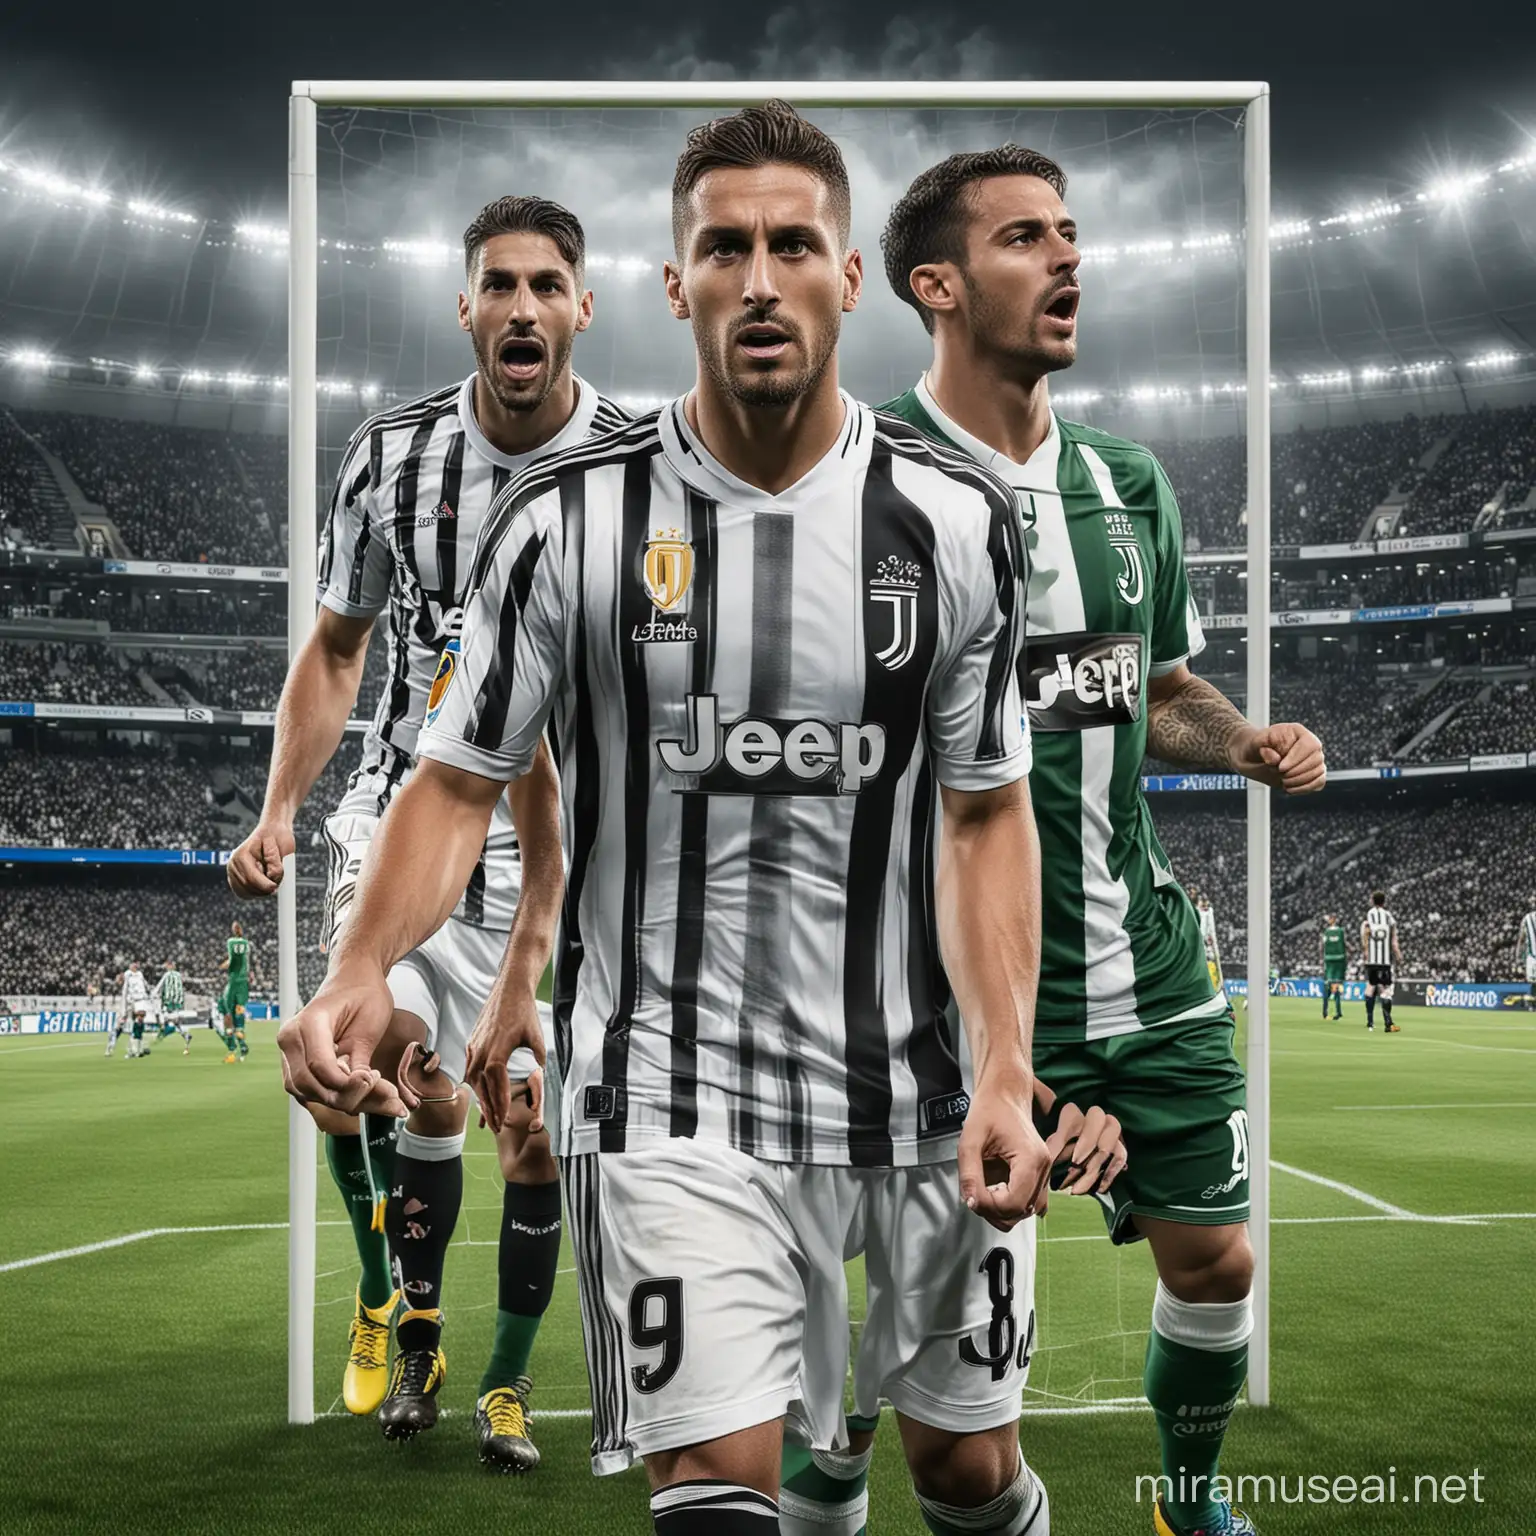 Juventus vs Sassuolo Serie A Match at Allianz Stadium Advertisement Poster